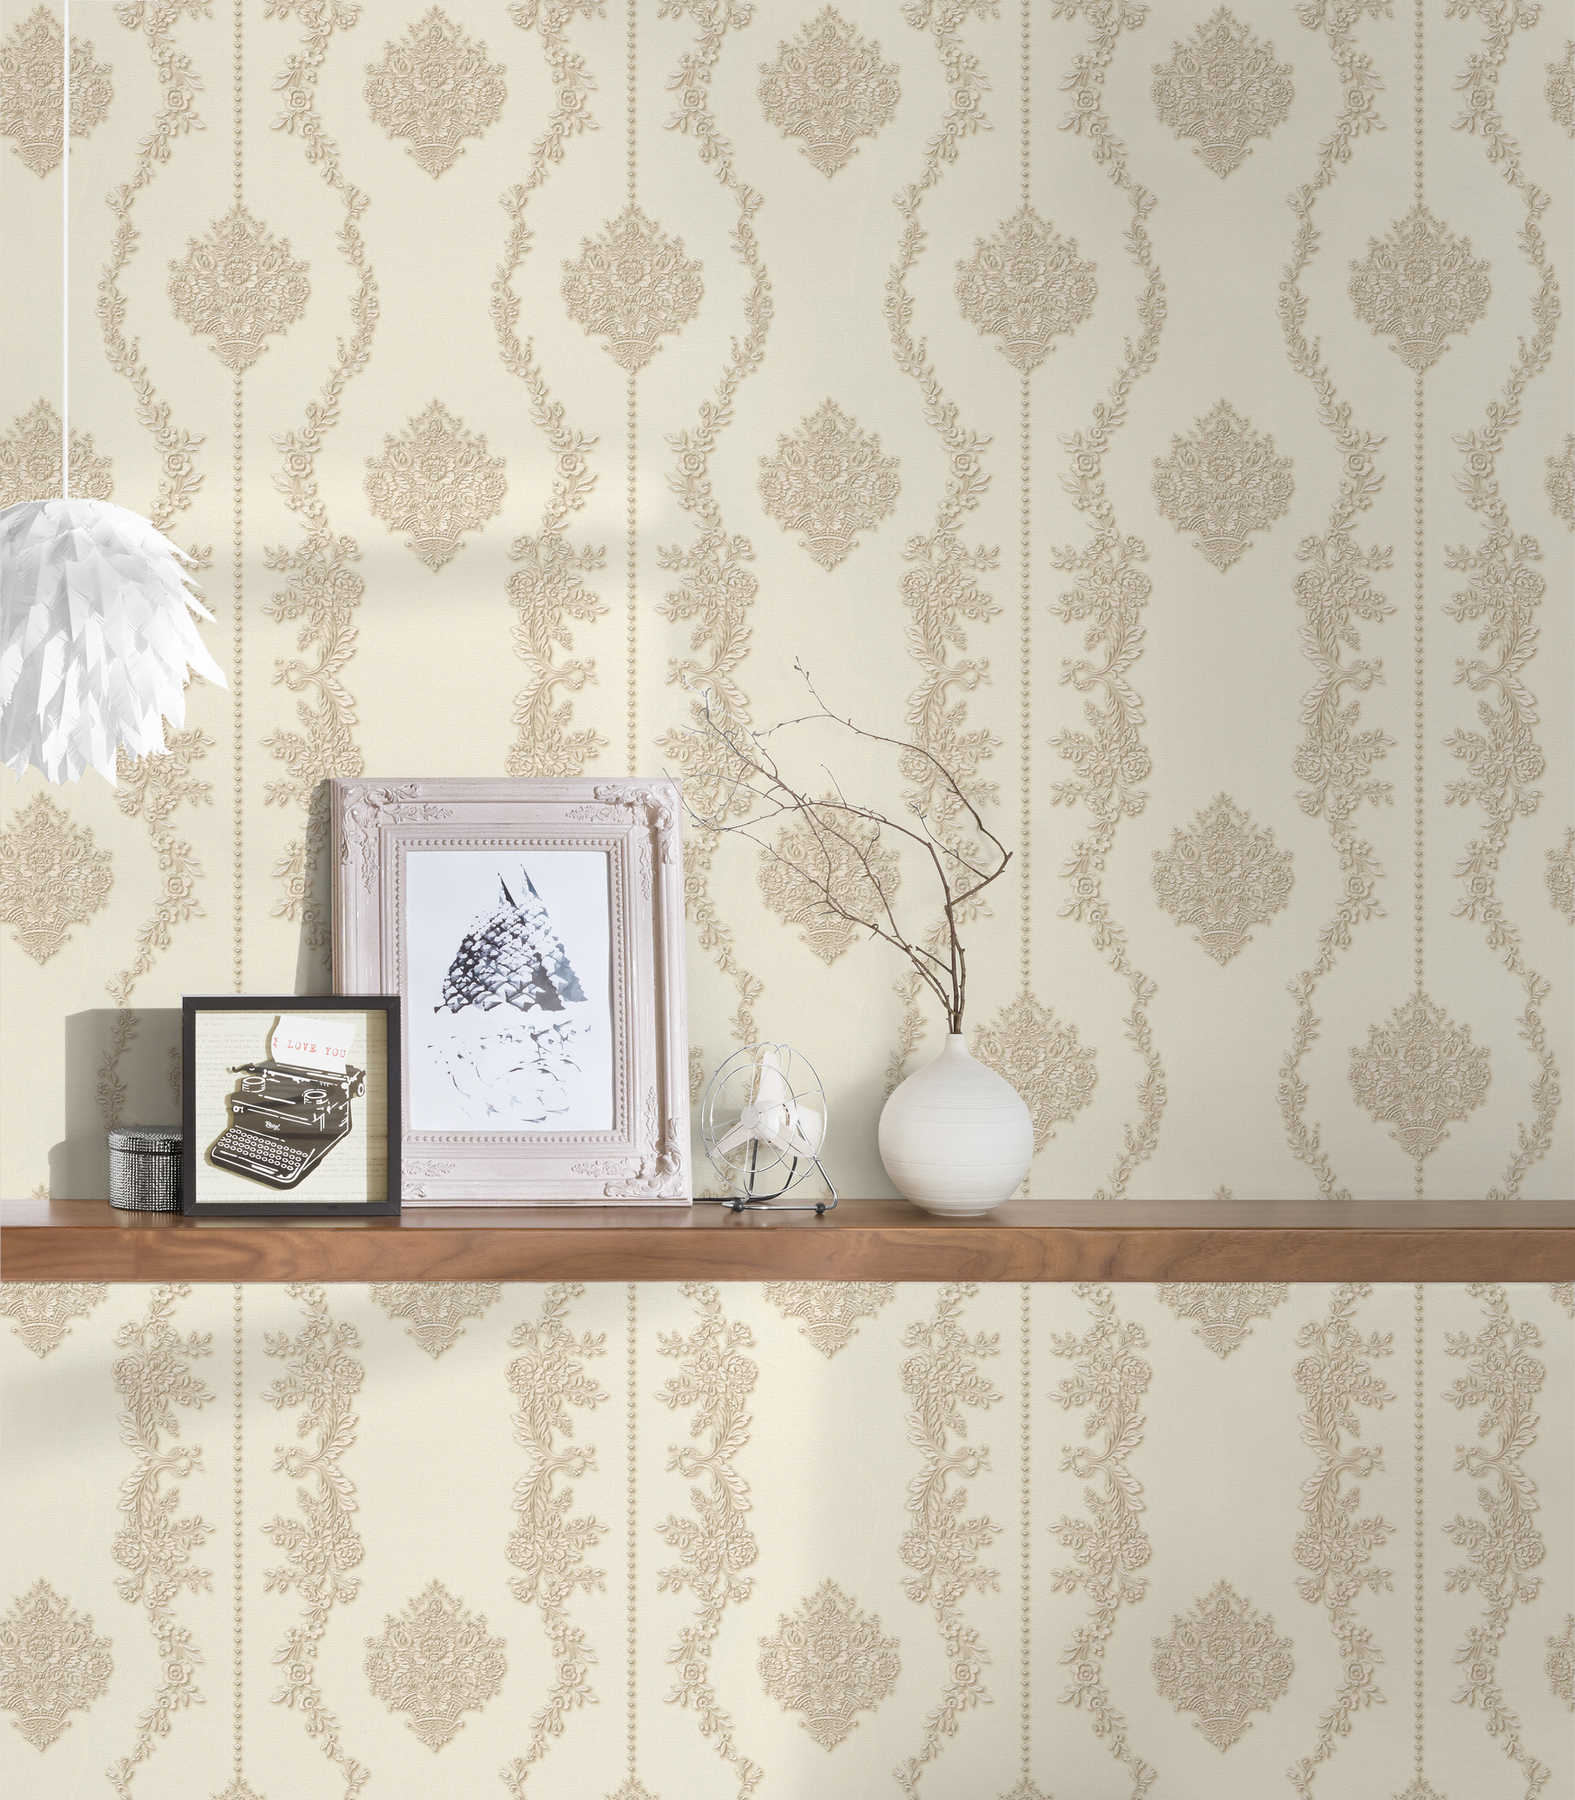             Opulent wallpaper with metallic decor & floral ornaments - beige
        